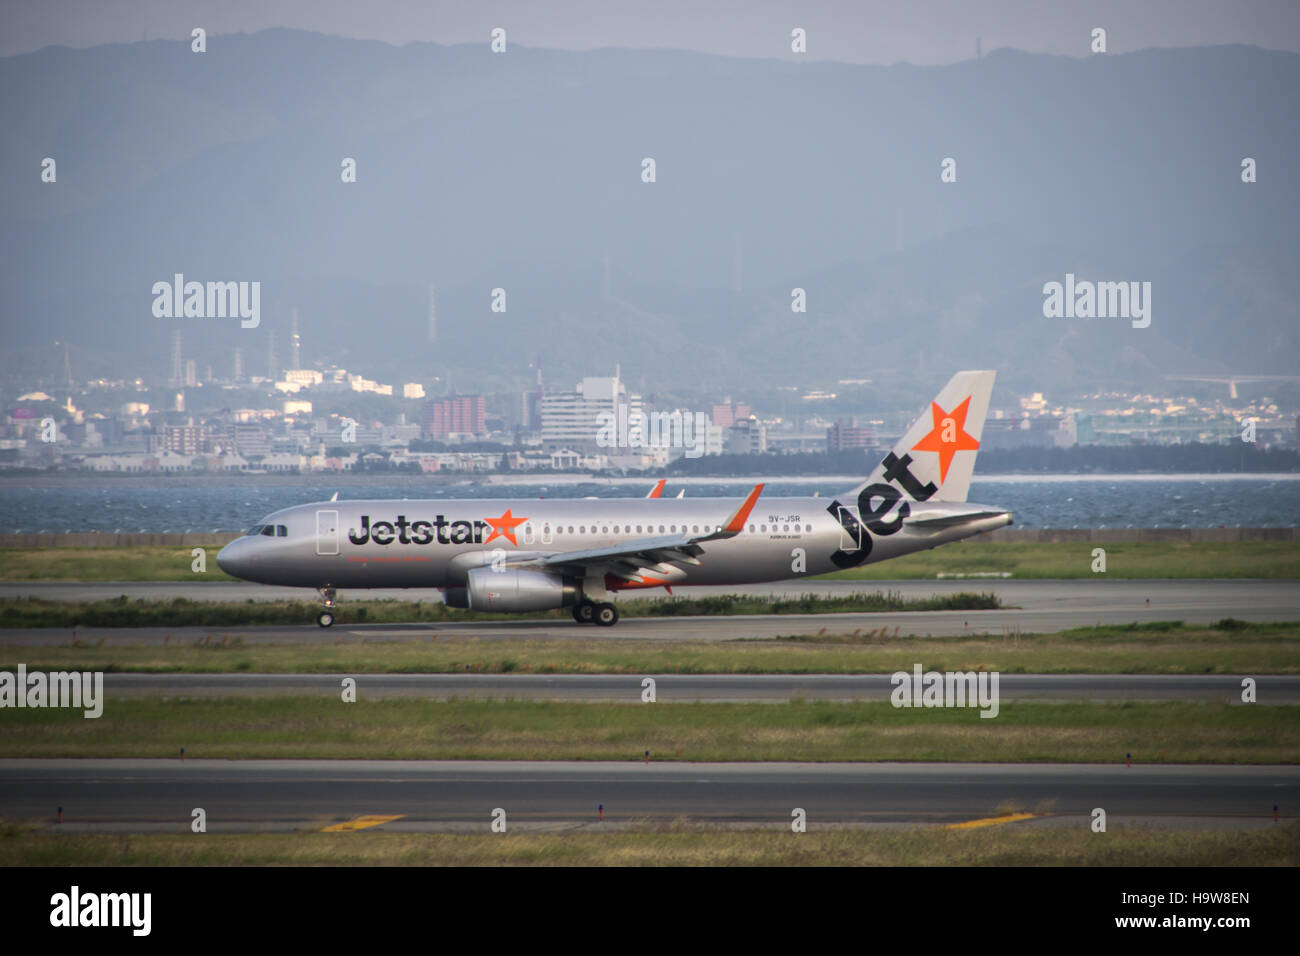 Osaka, JAPAN - ca. Juni 2016: Jetstar Flugzeug geschleppt am internationalen Flughafen Narita, Japan. Stockfoto